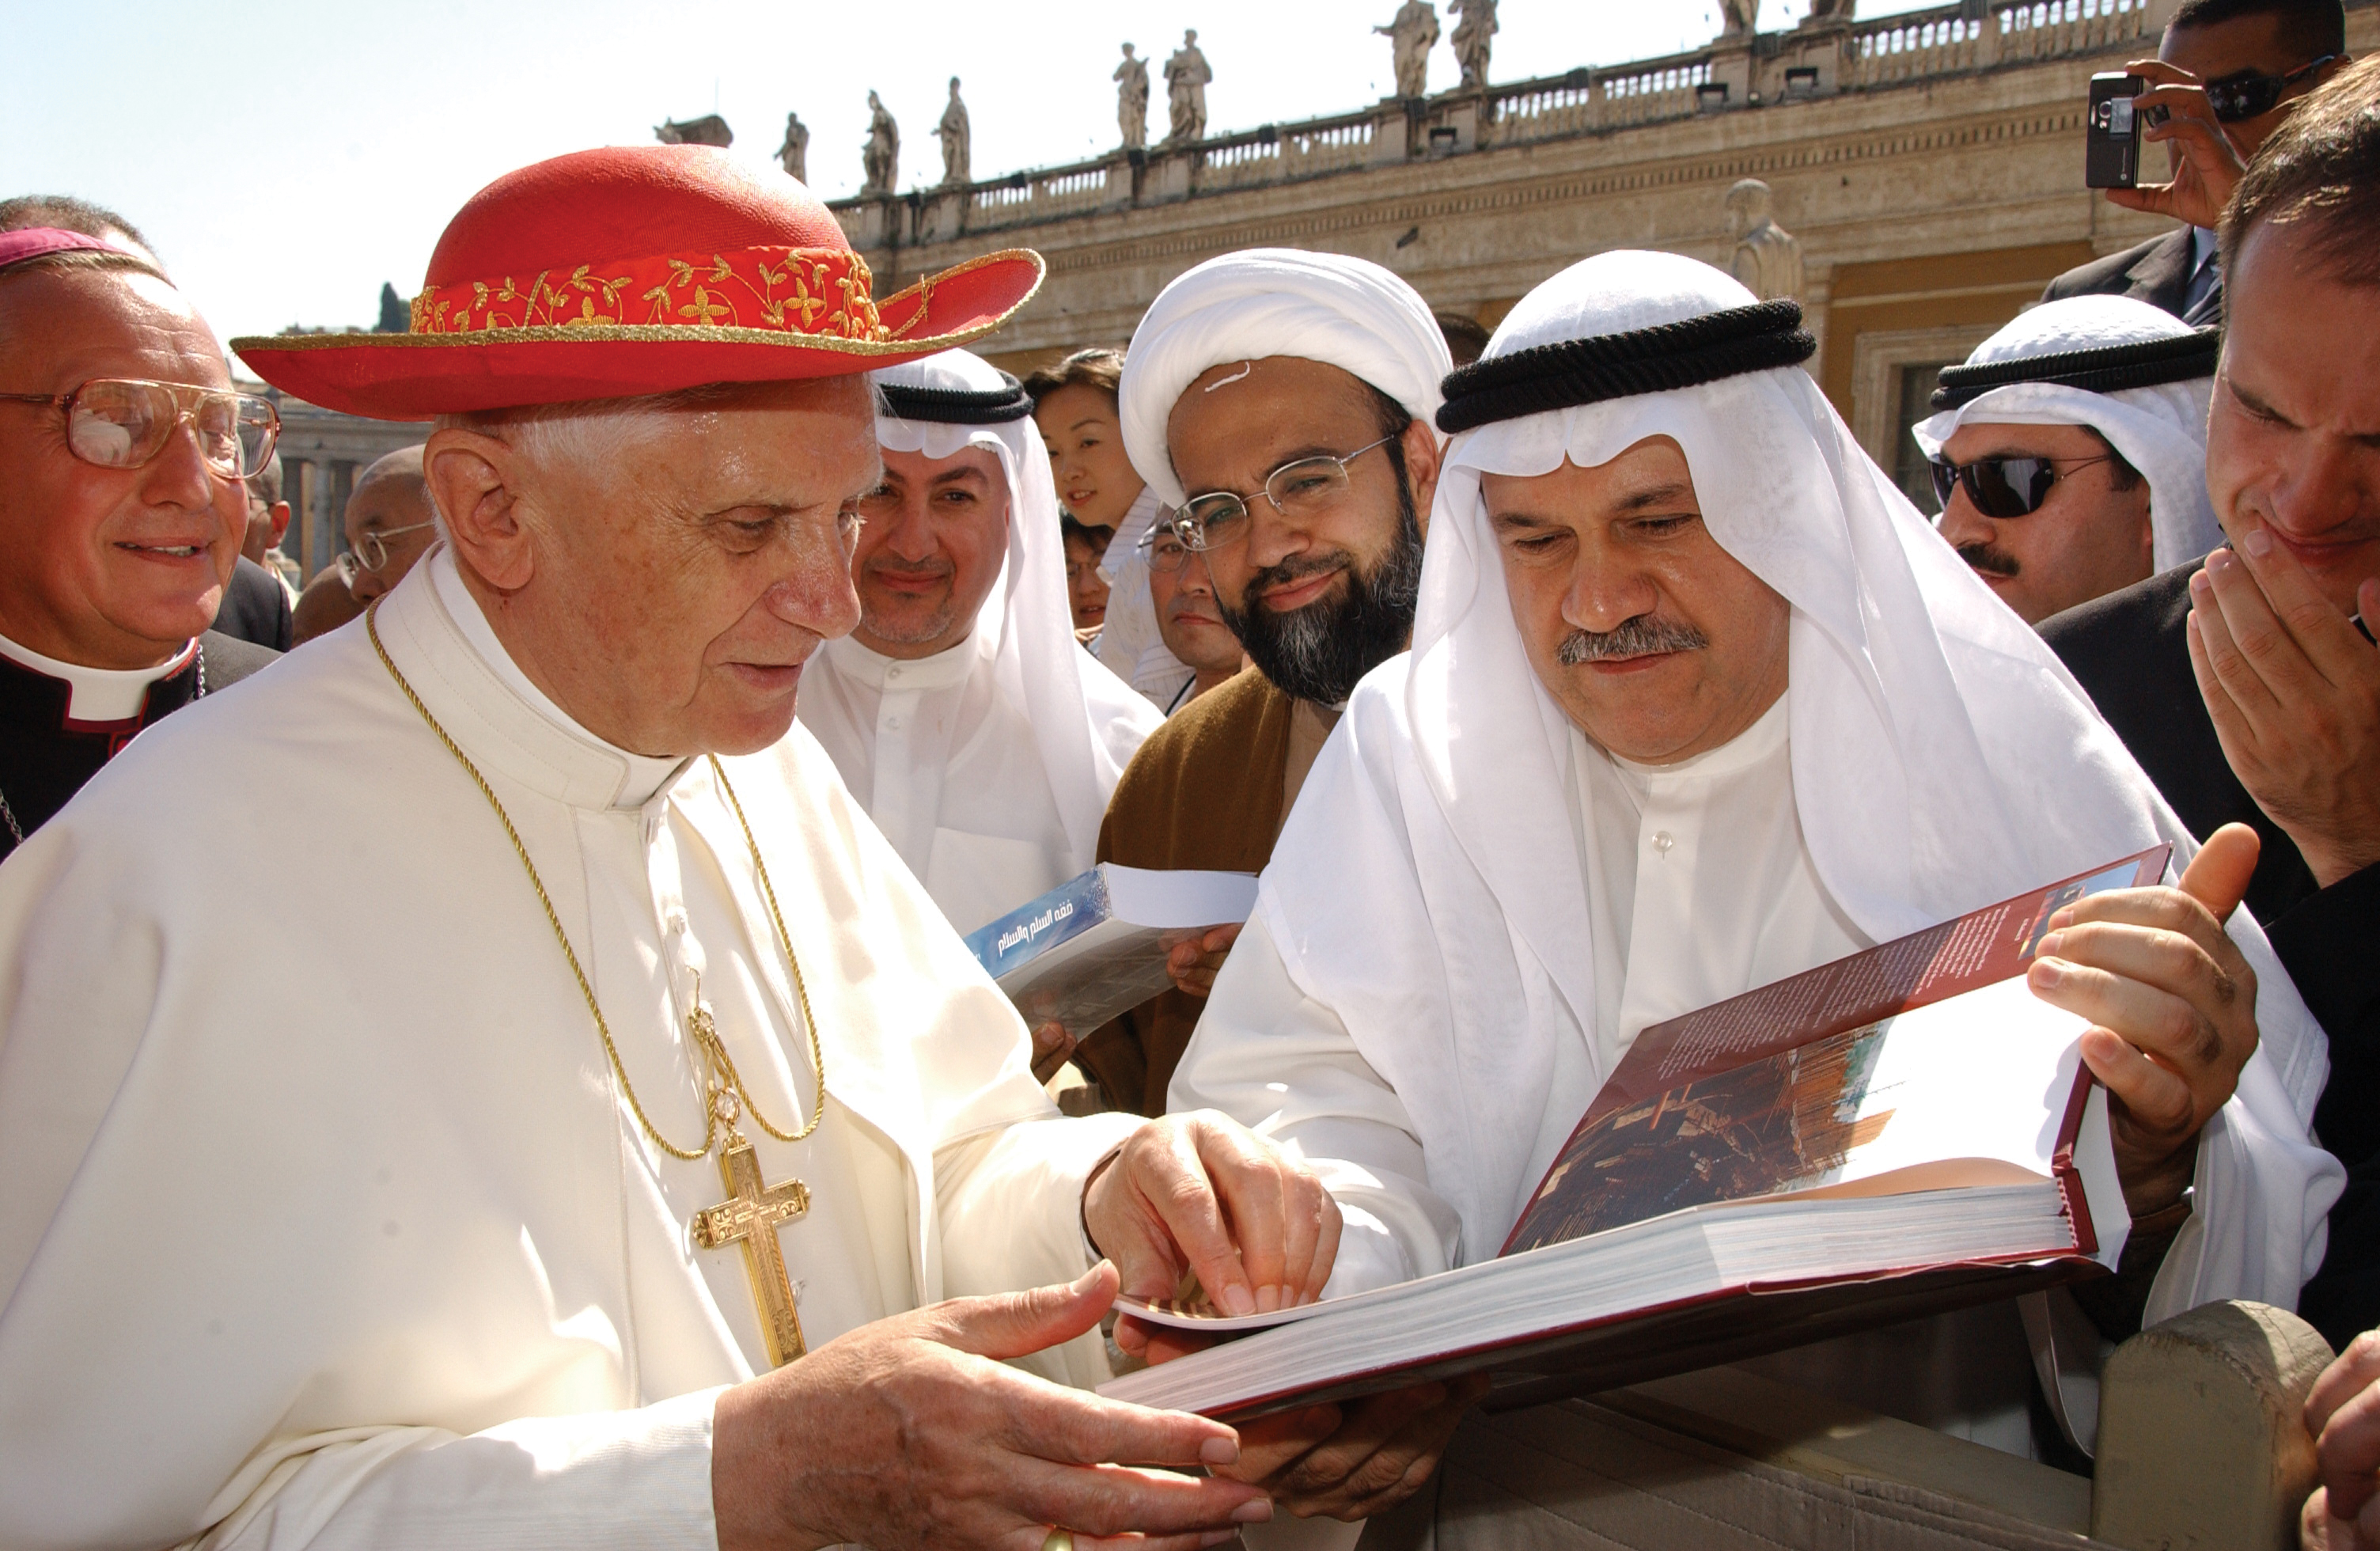 Pope Benedict XVI with Muslim leaders at the Vatican. 2006. Credit: L'Osservatore Romano